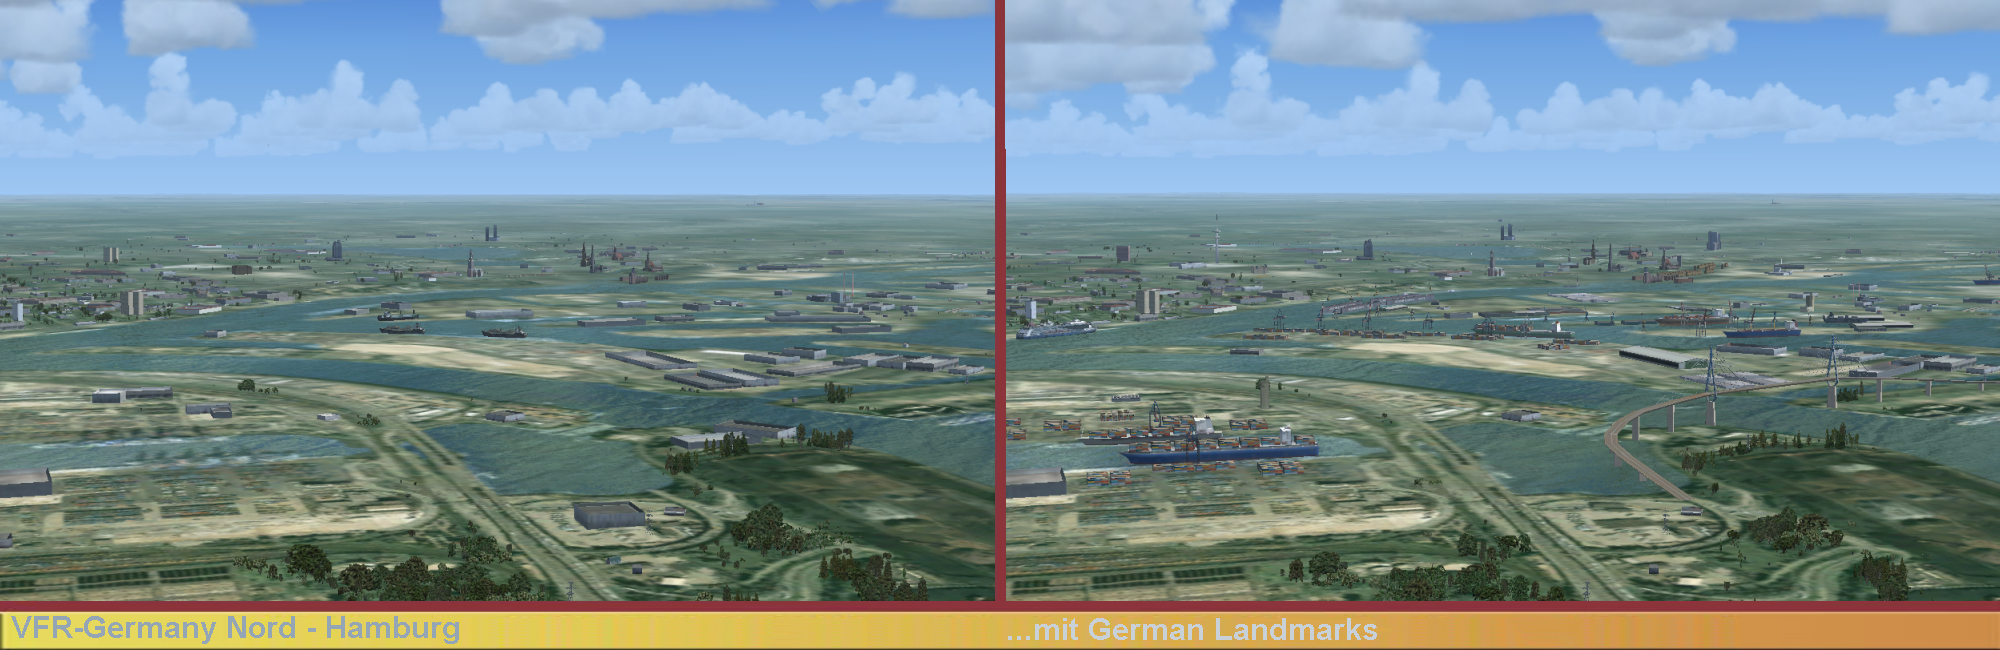 German_Landmarks-VFR-Germany_02.jpg